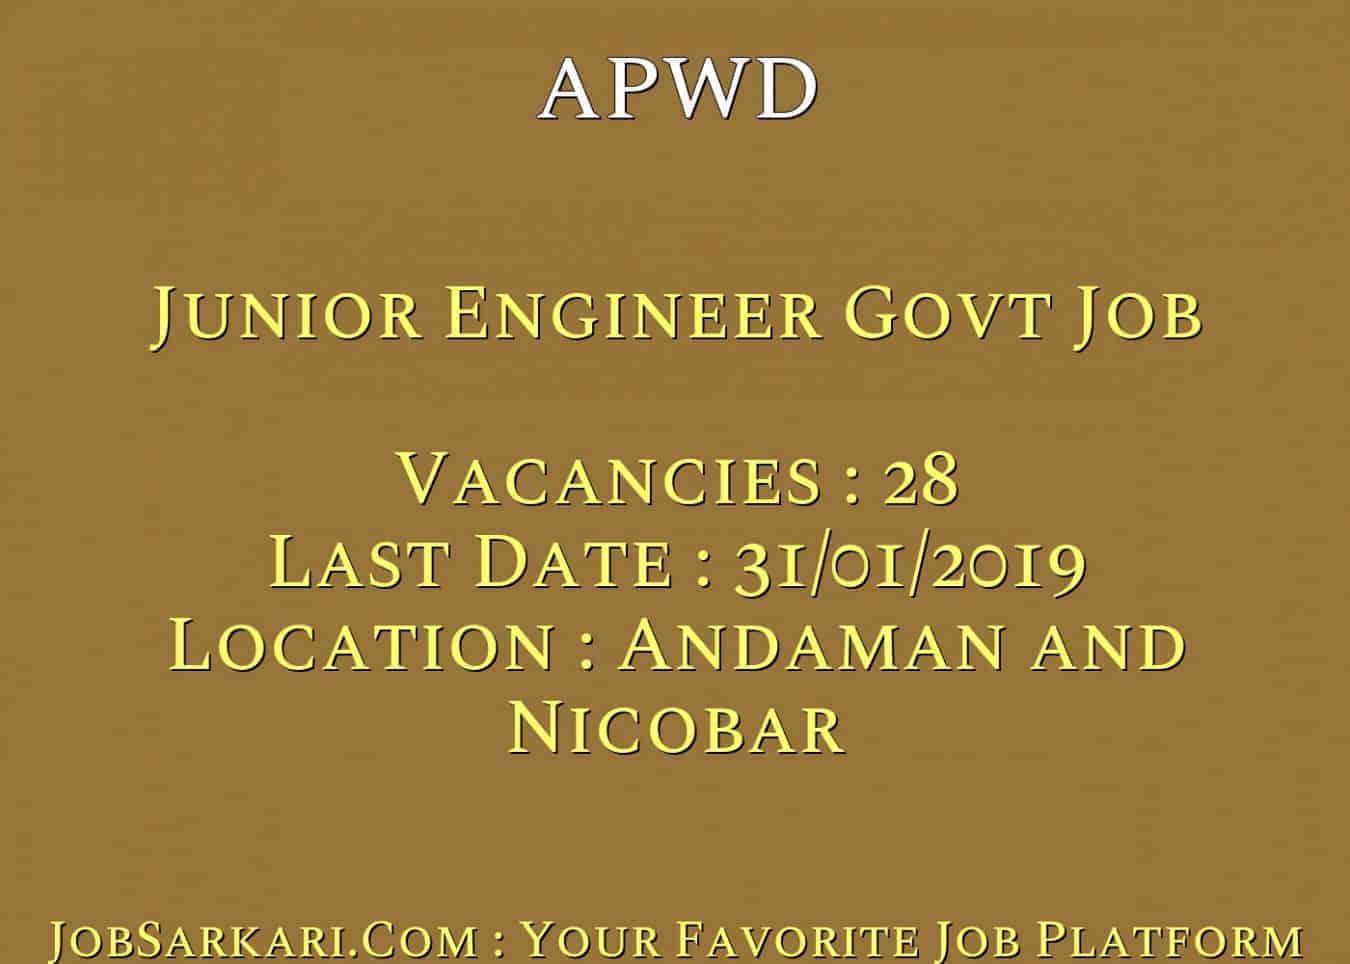 APWD Recruitment 2019 For Junior Engineer Govt Job